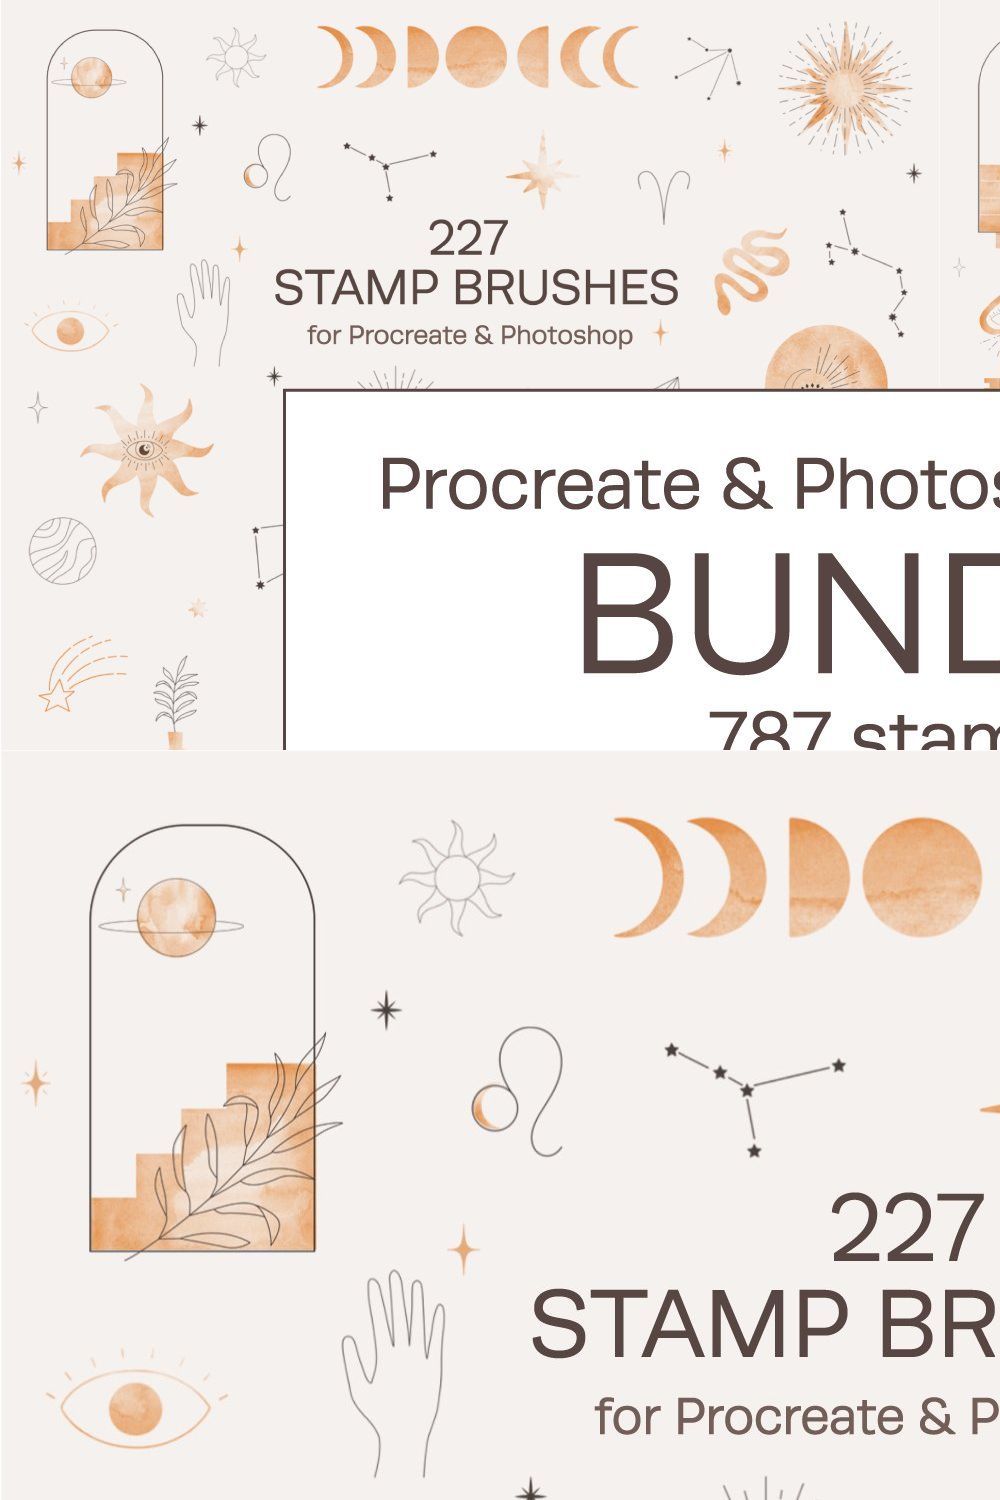 Procreate & Photoshop Brushes Bundle pinterest preview image.